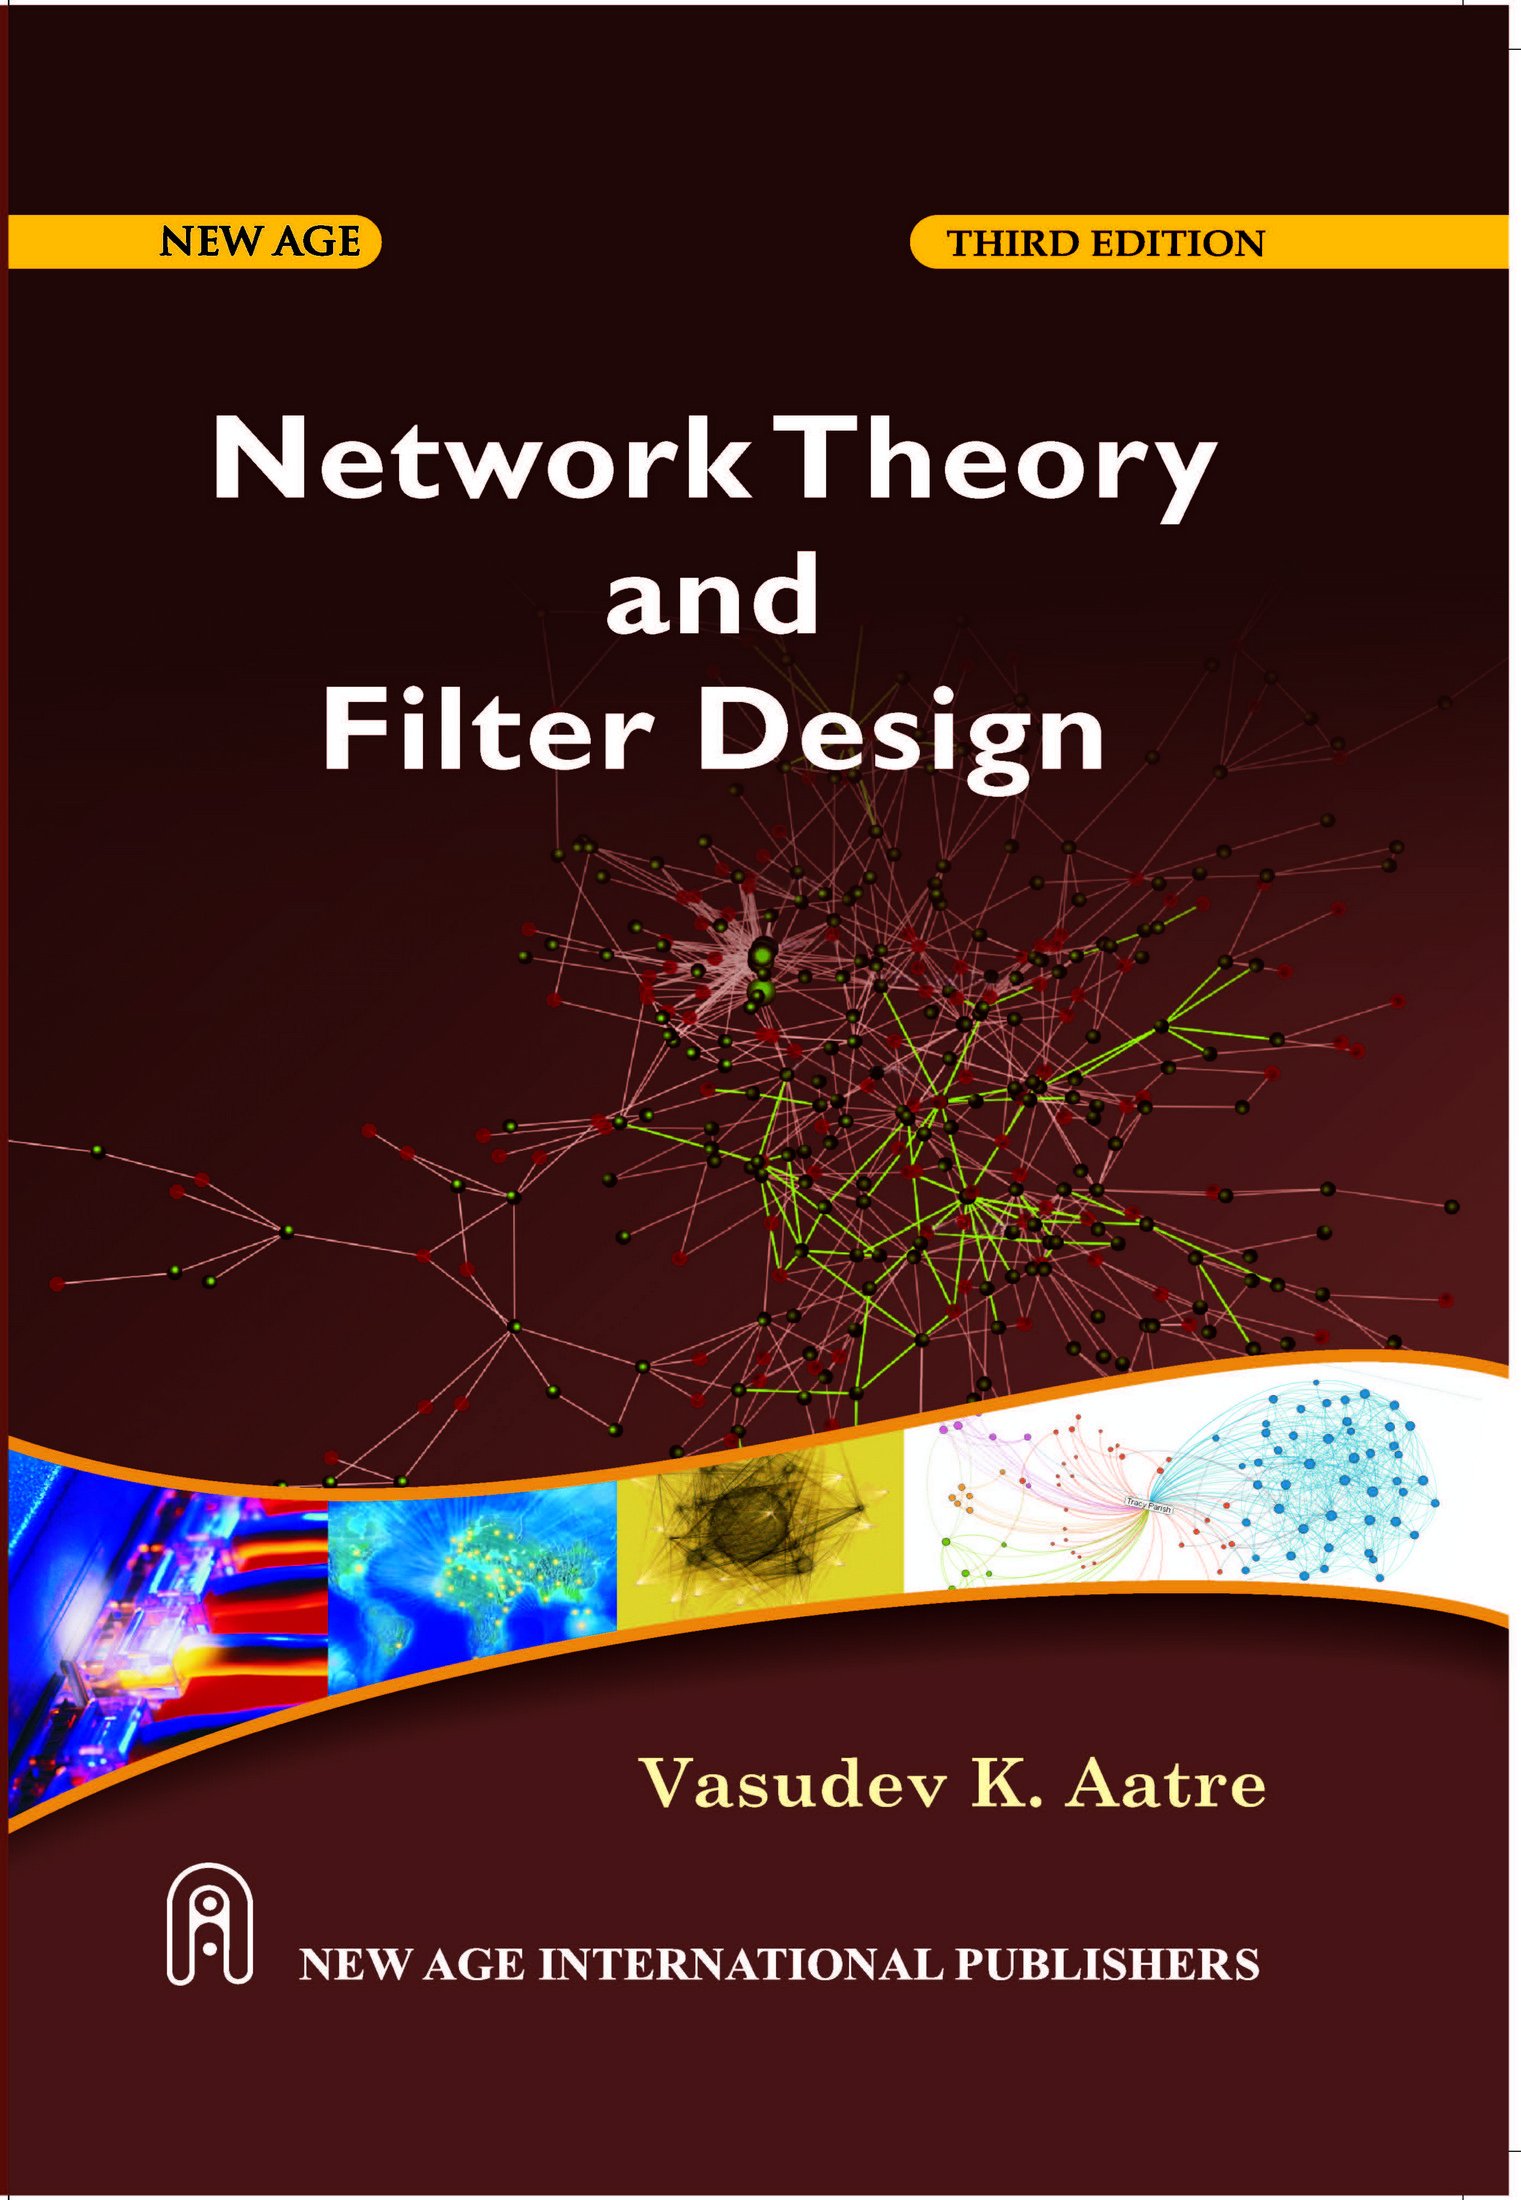 Network theory books pdf free download windows 7